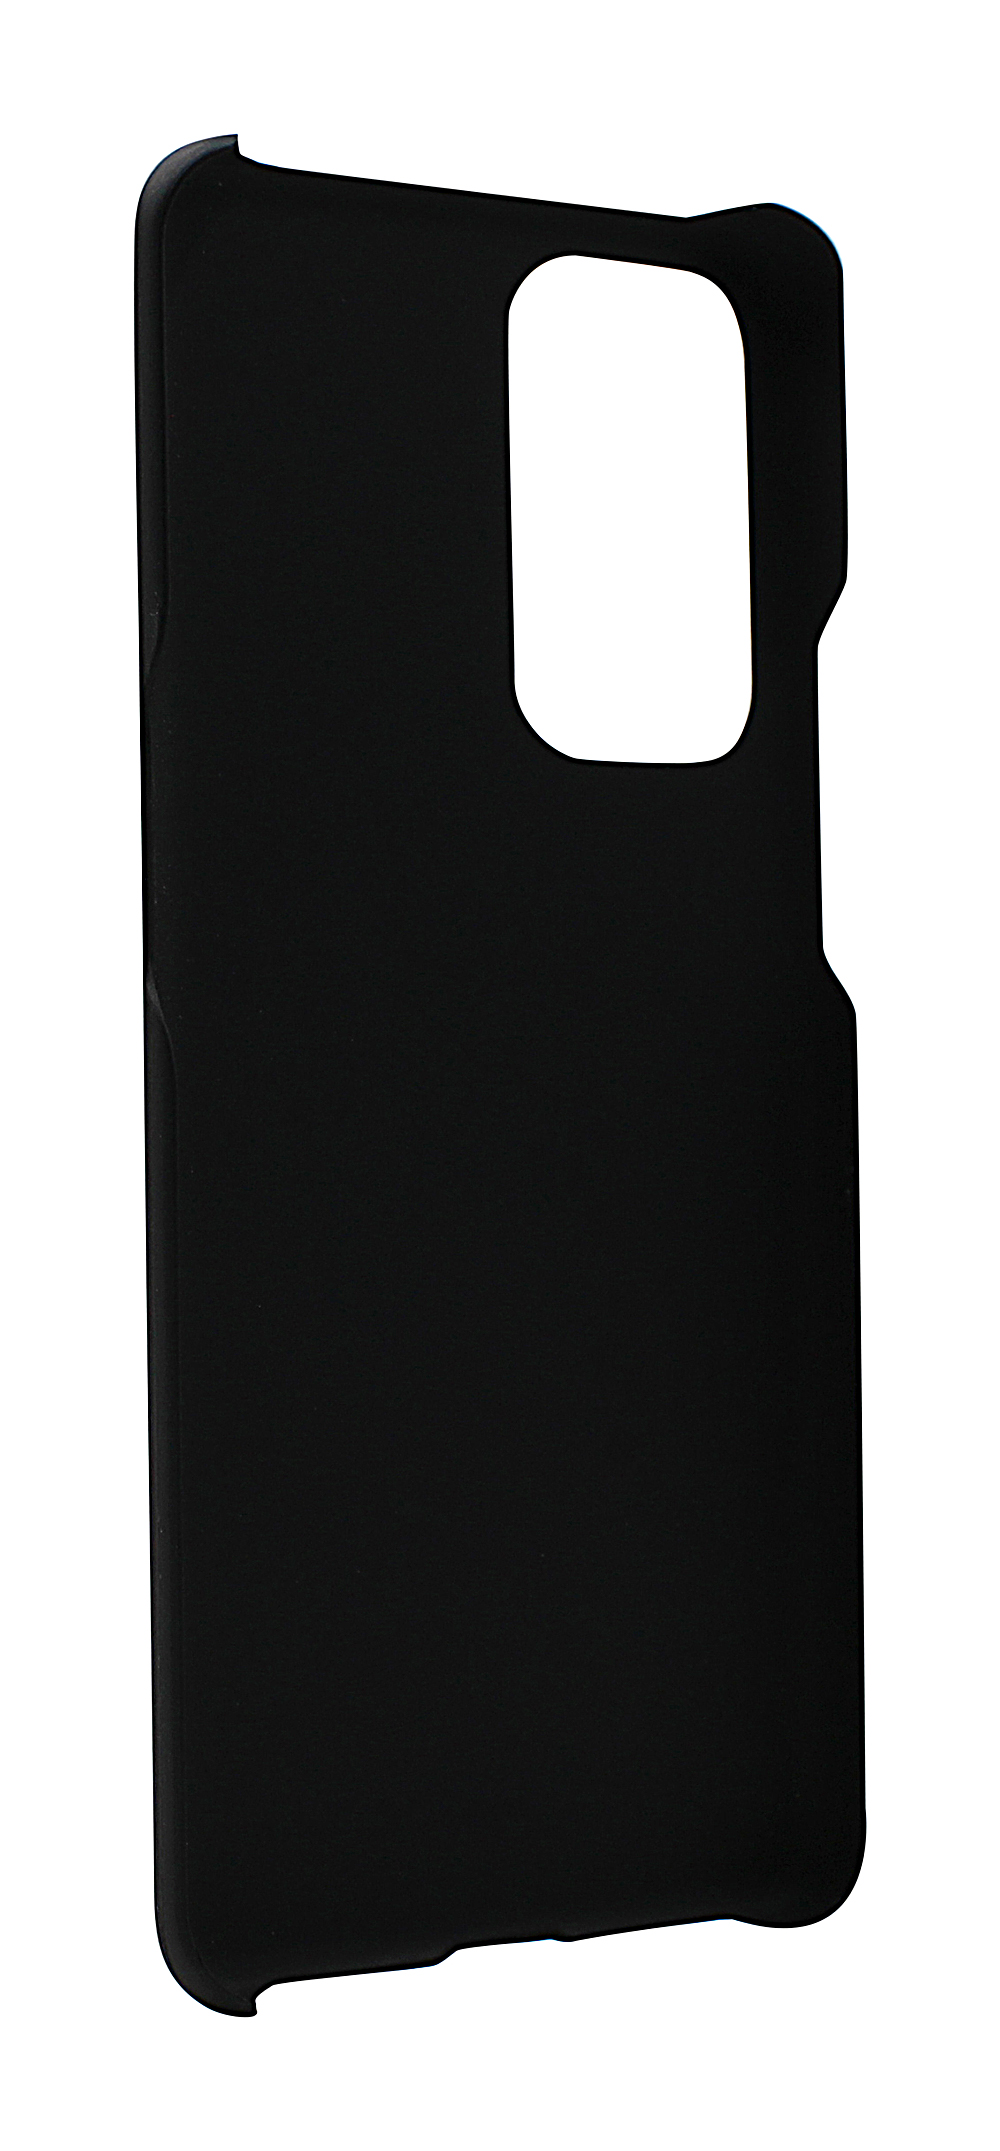 CoverInSkimblocker XL Magnet Fodral OnePlus 9 Pro